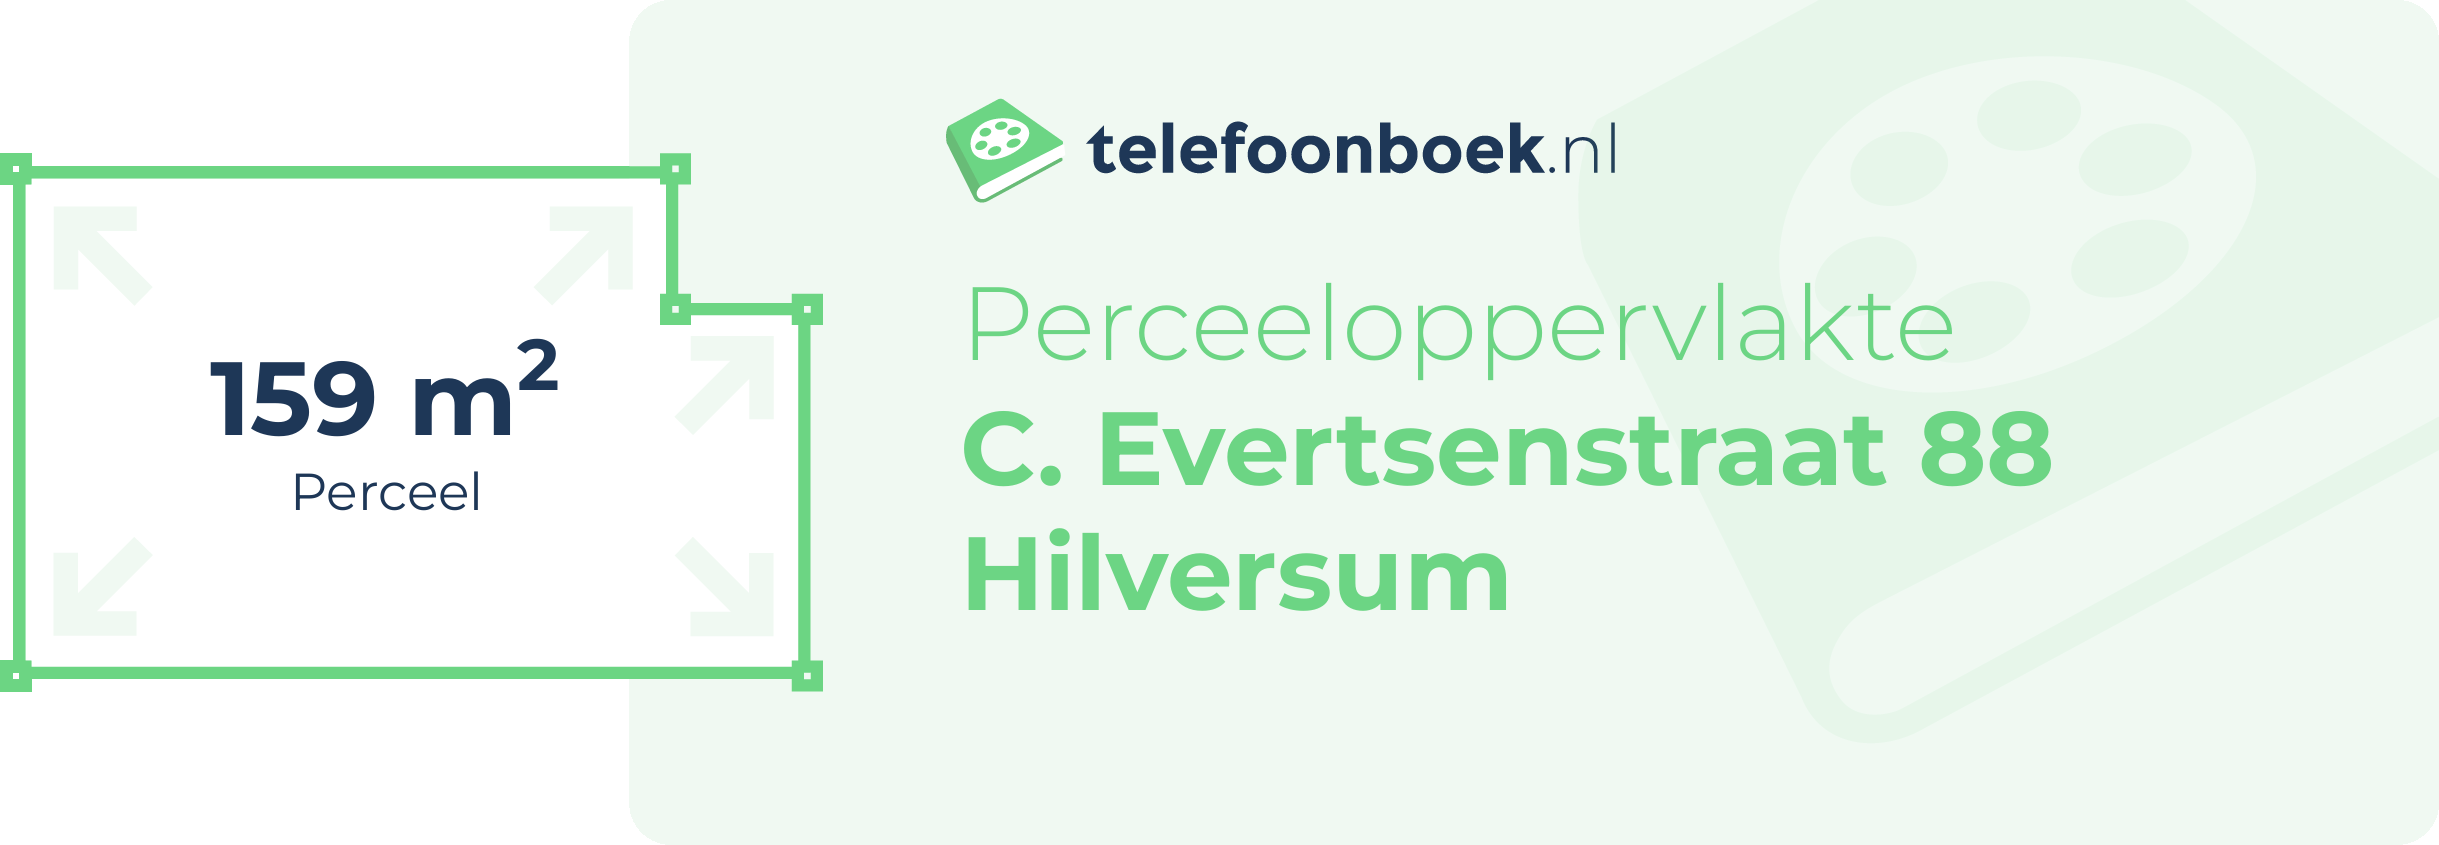 Perceeloppervlakte C. Evertsenstraat 88 Hilversum